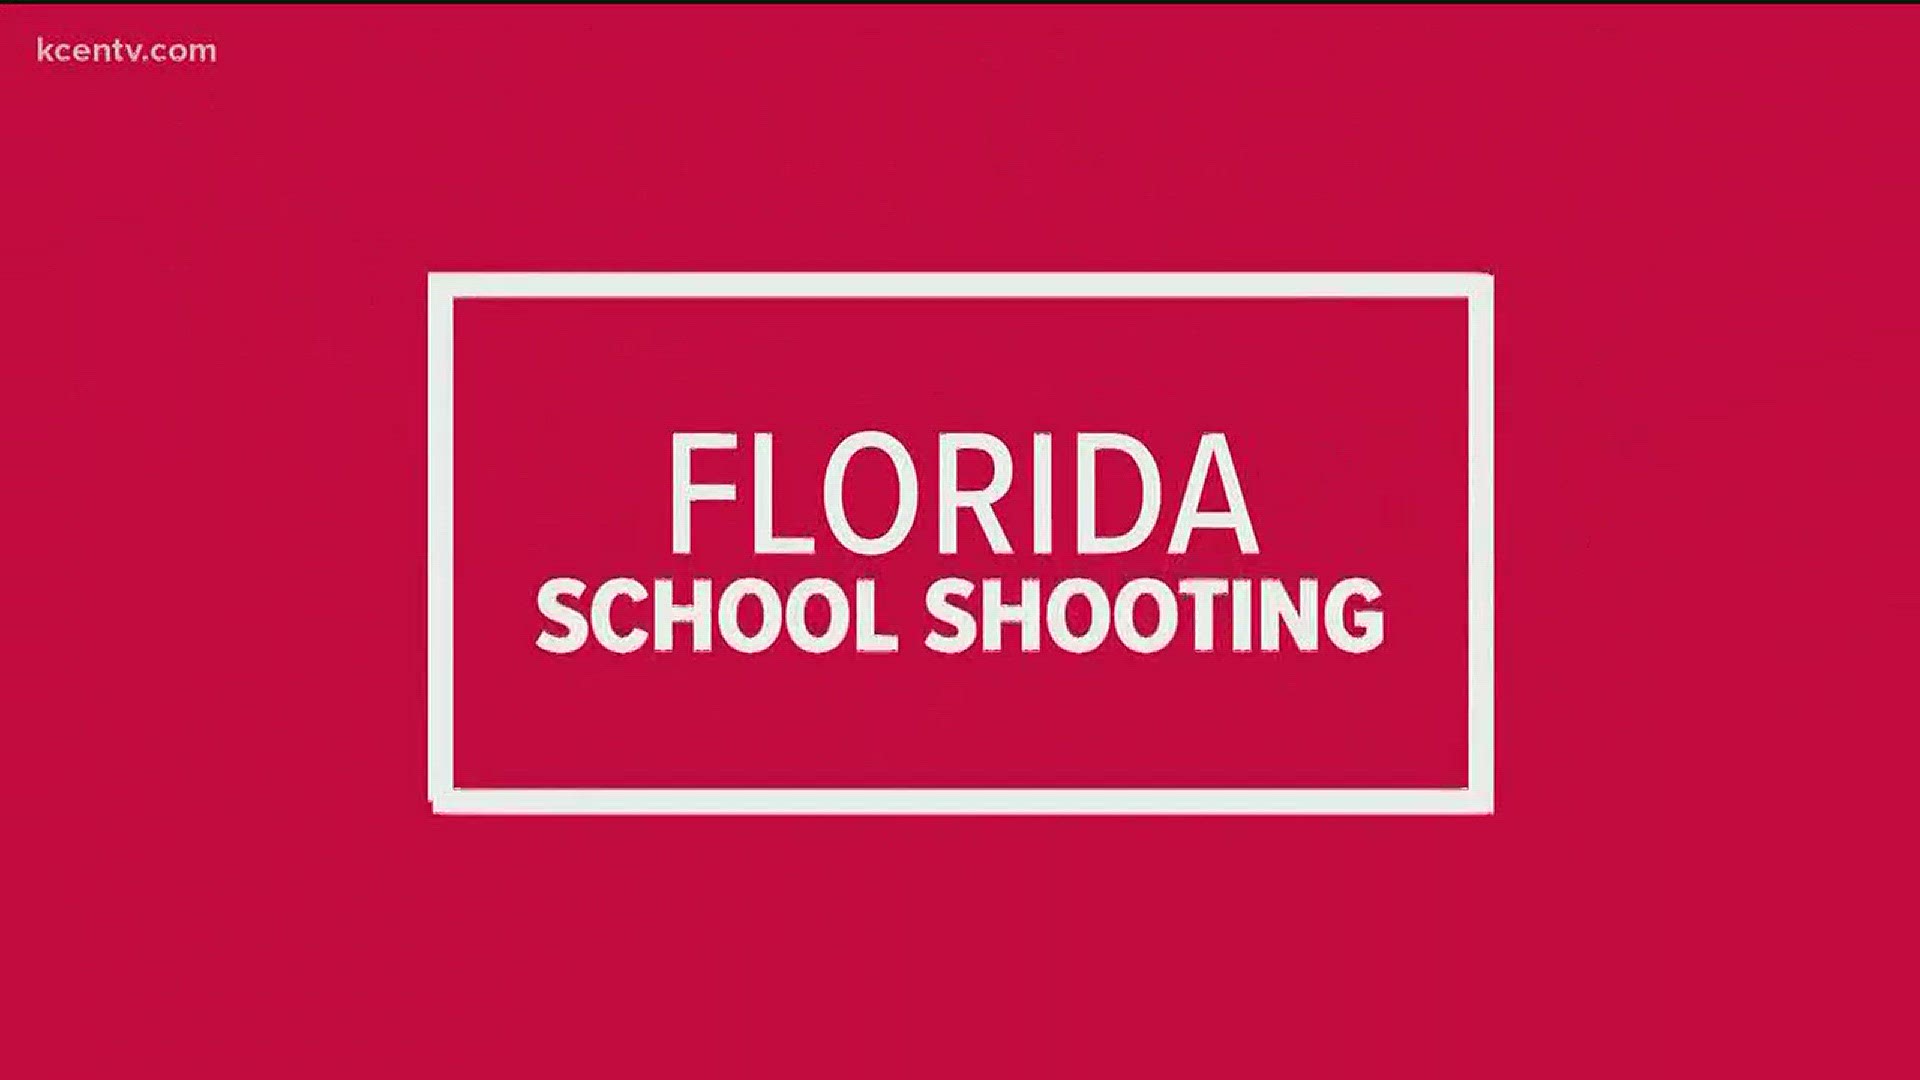 Florida shooter kills 17